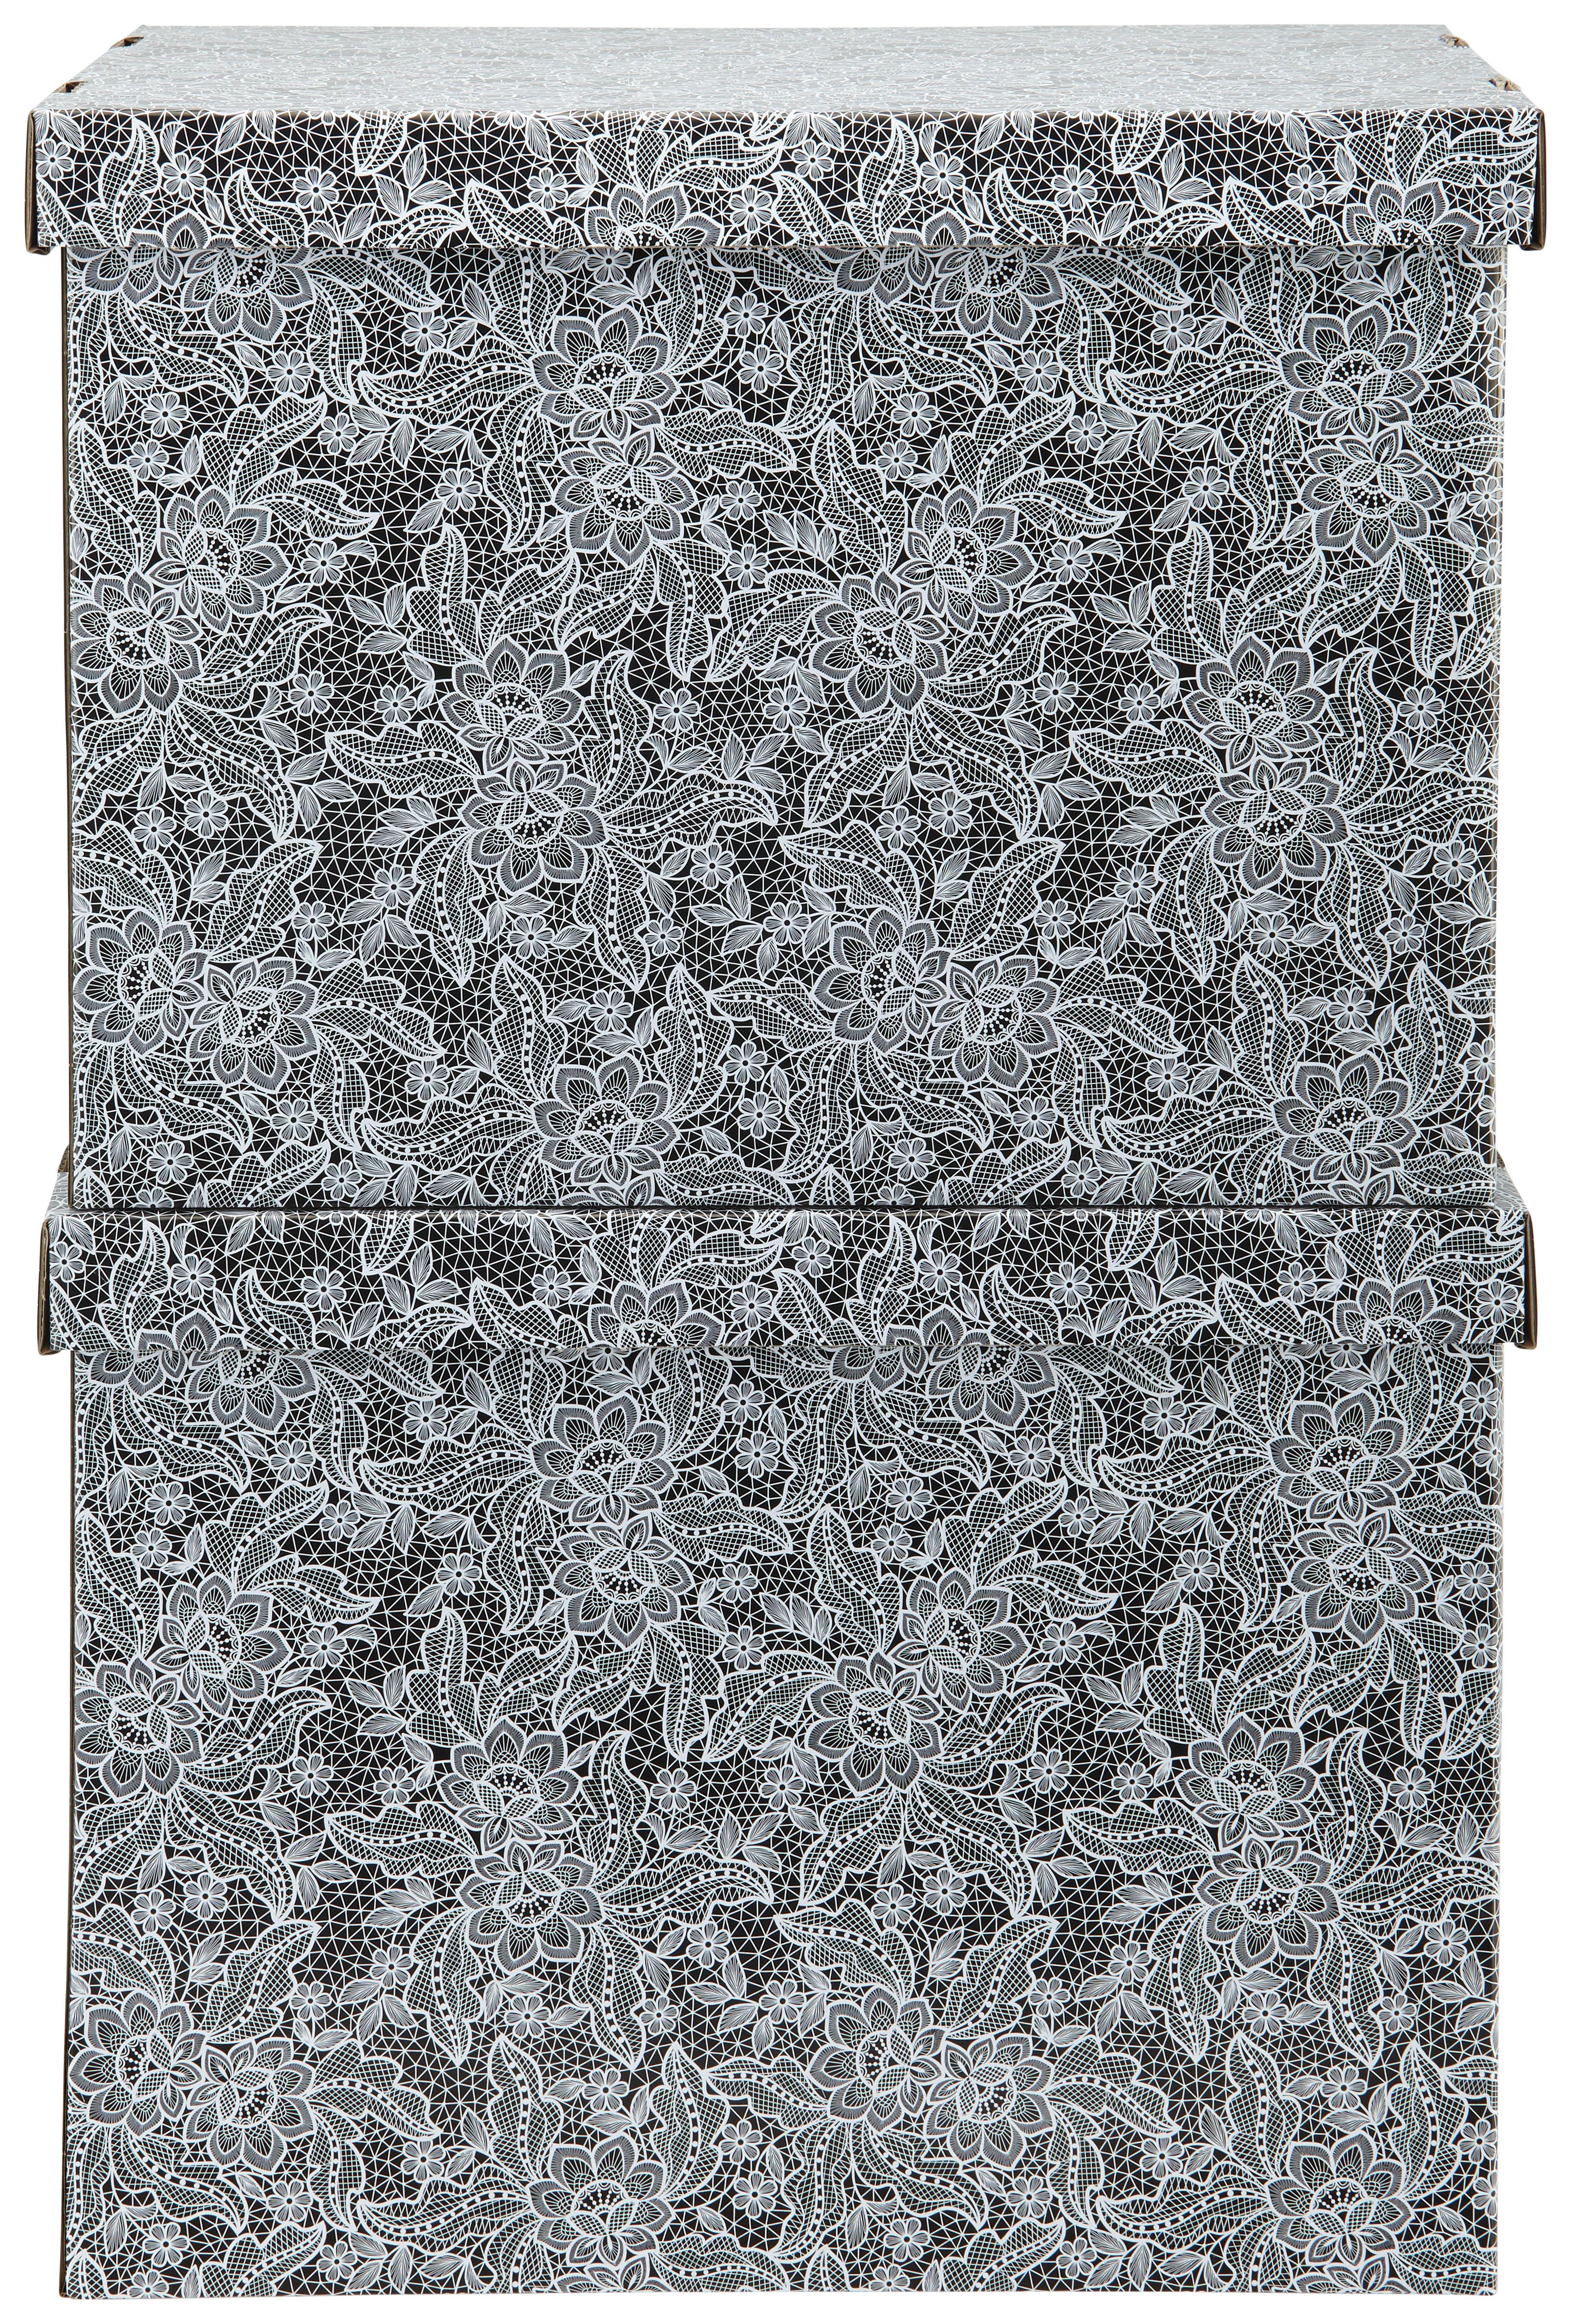 Škatla S Pokrovom Jimmy -Ext- - črna/bela, karton (44,3/33,5/32,5cm) - Modern Living